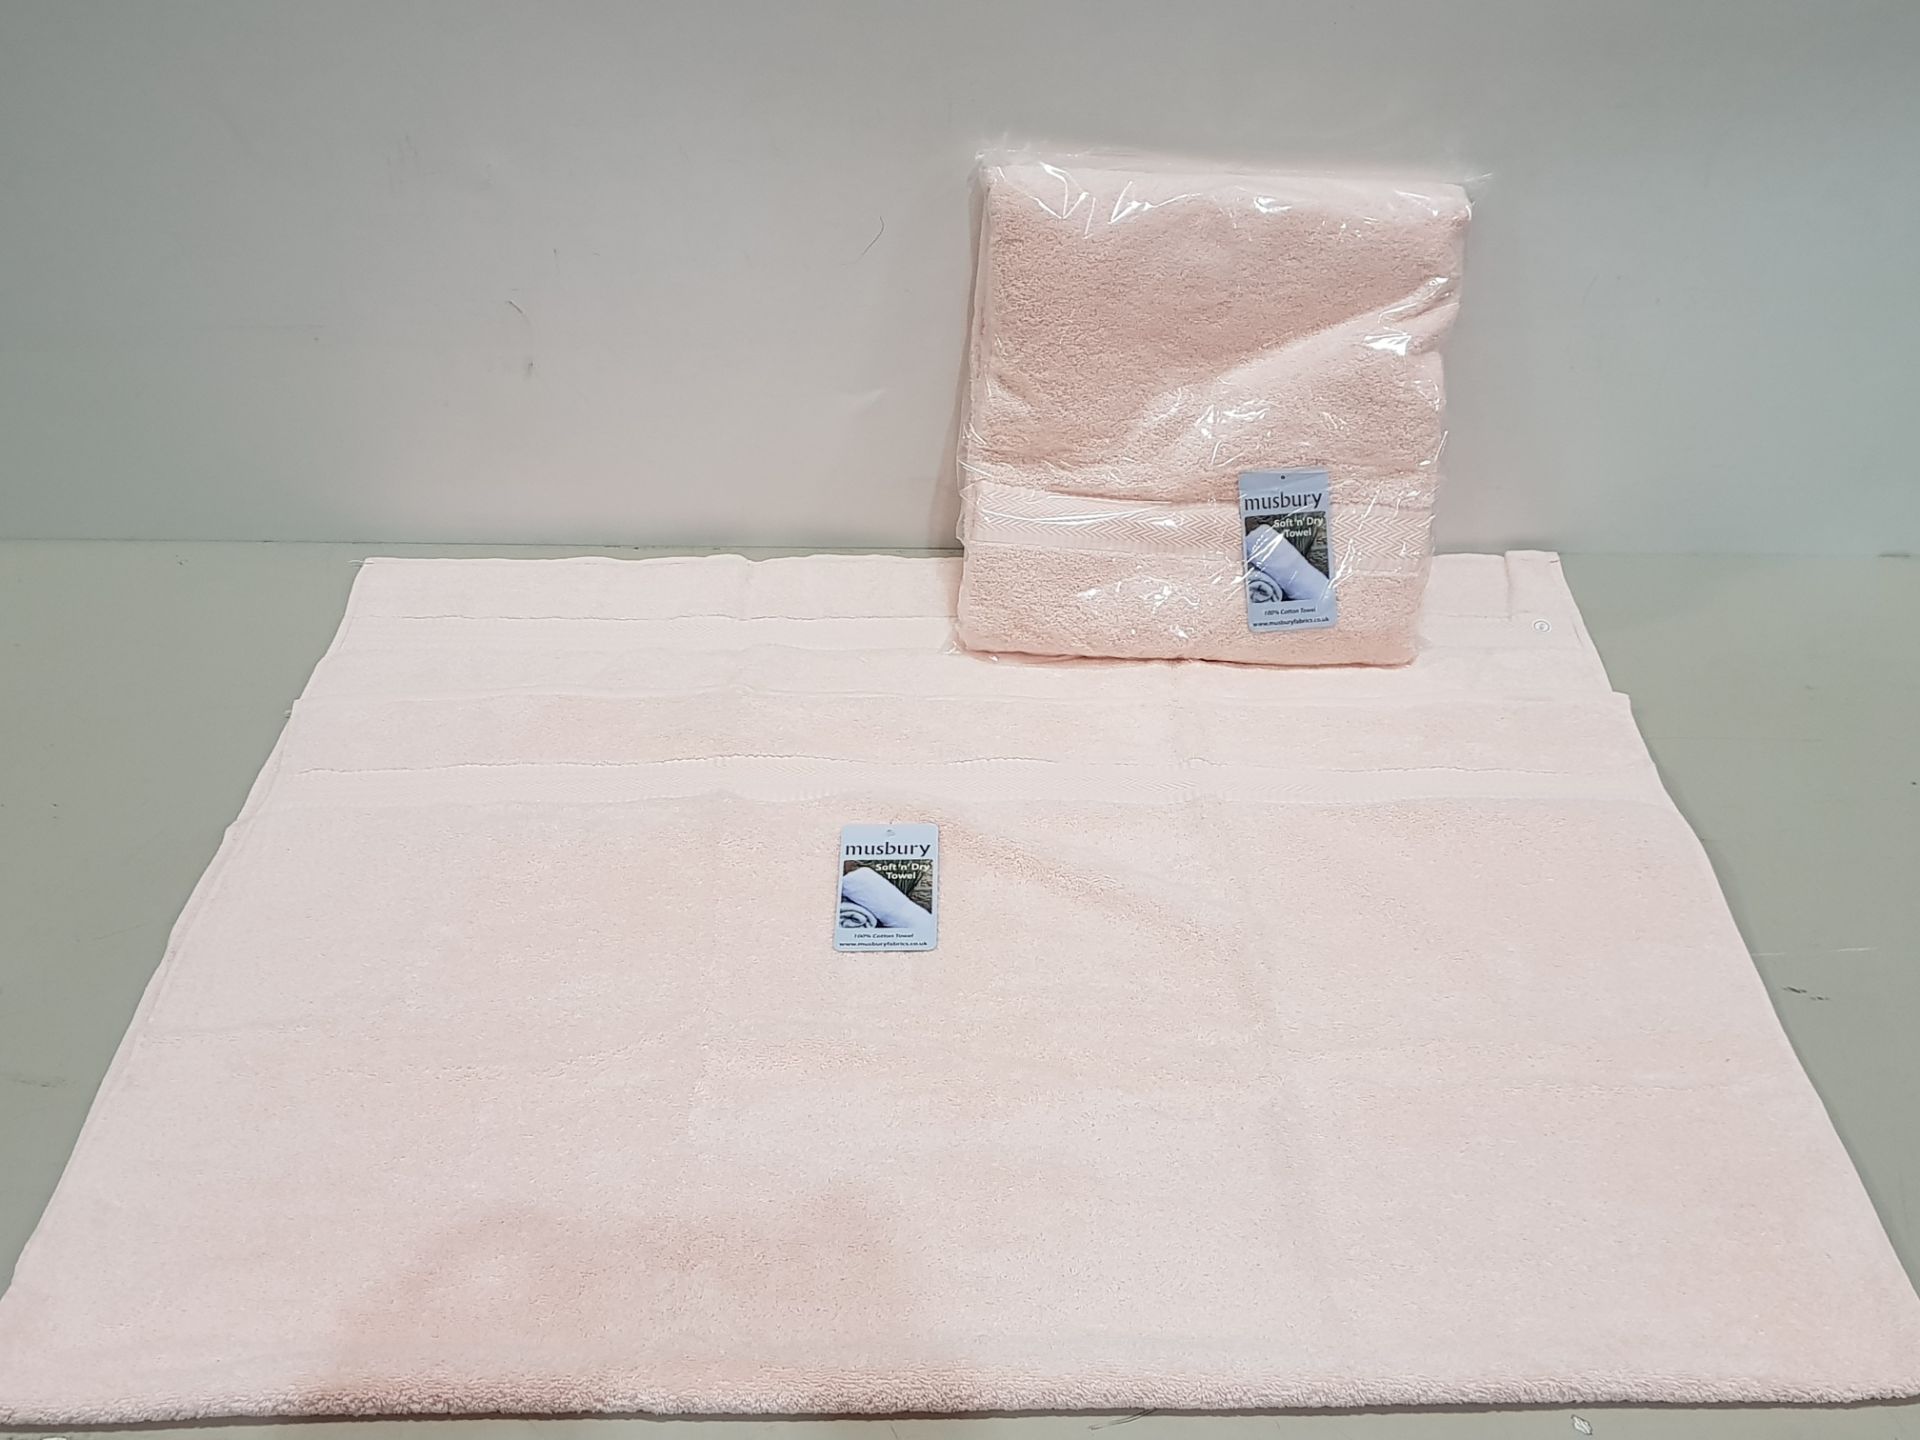 20 X BRAND NEW MUSBURY SOFT 'N' DRY BATH TOWELS IN PEACH COLOUR (SIZE : 100 X 150 CM ) - IN 2 BOX